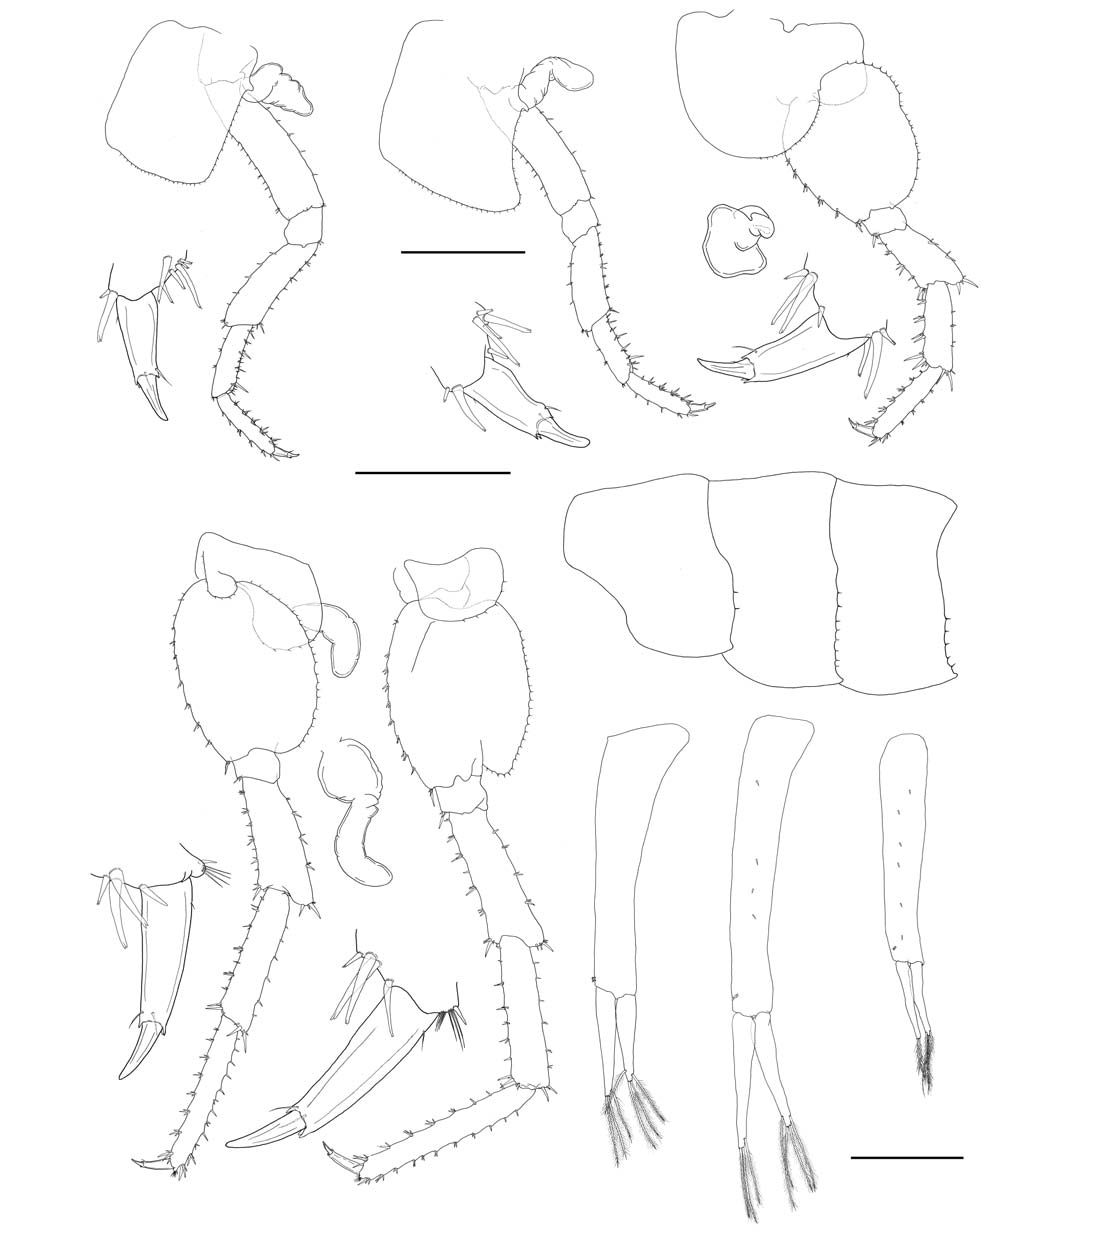 Paciforchestia pyatakovi (Derzhavin 1937) male. A Pereopod 3; B Dactyls of pereopod 3; C Pereopod 4; D Dactyls of pereopod 4; E Pereopod 5; F Gill 4; G Dactyls of pereopod 5; H Pereopod 6; I Gill 5; J Dactyls of pereopod 6; K Pereopod 7; LDactyls of pereopod 7; M Epimeral plates; N Pleopod 1; O Pleopod 2; P Pleopod. Scale bars: A C E F H I K M=2 mm B DG J L N-P=0.5 mm.